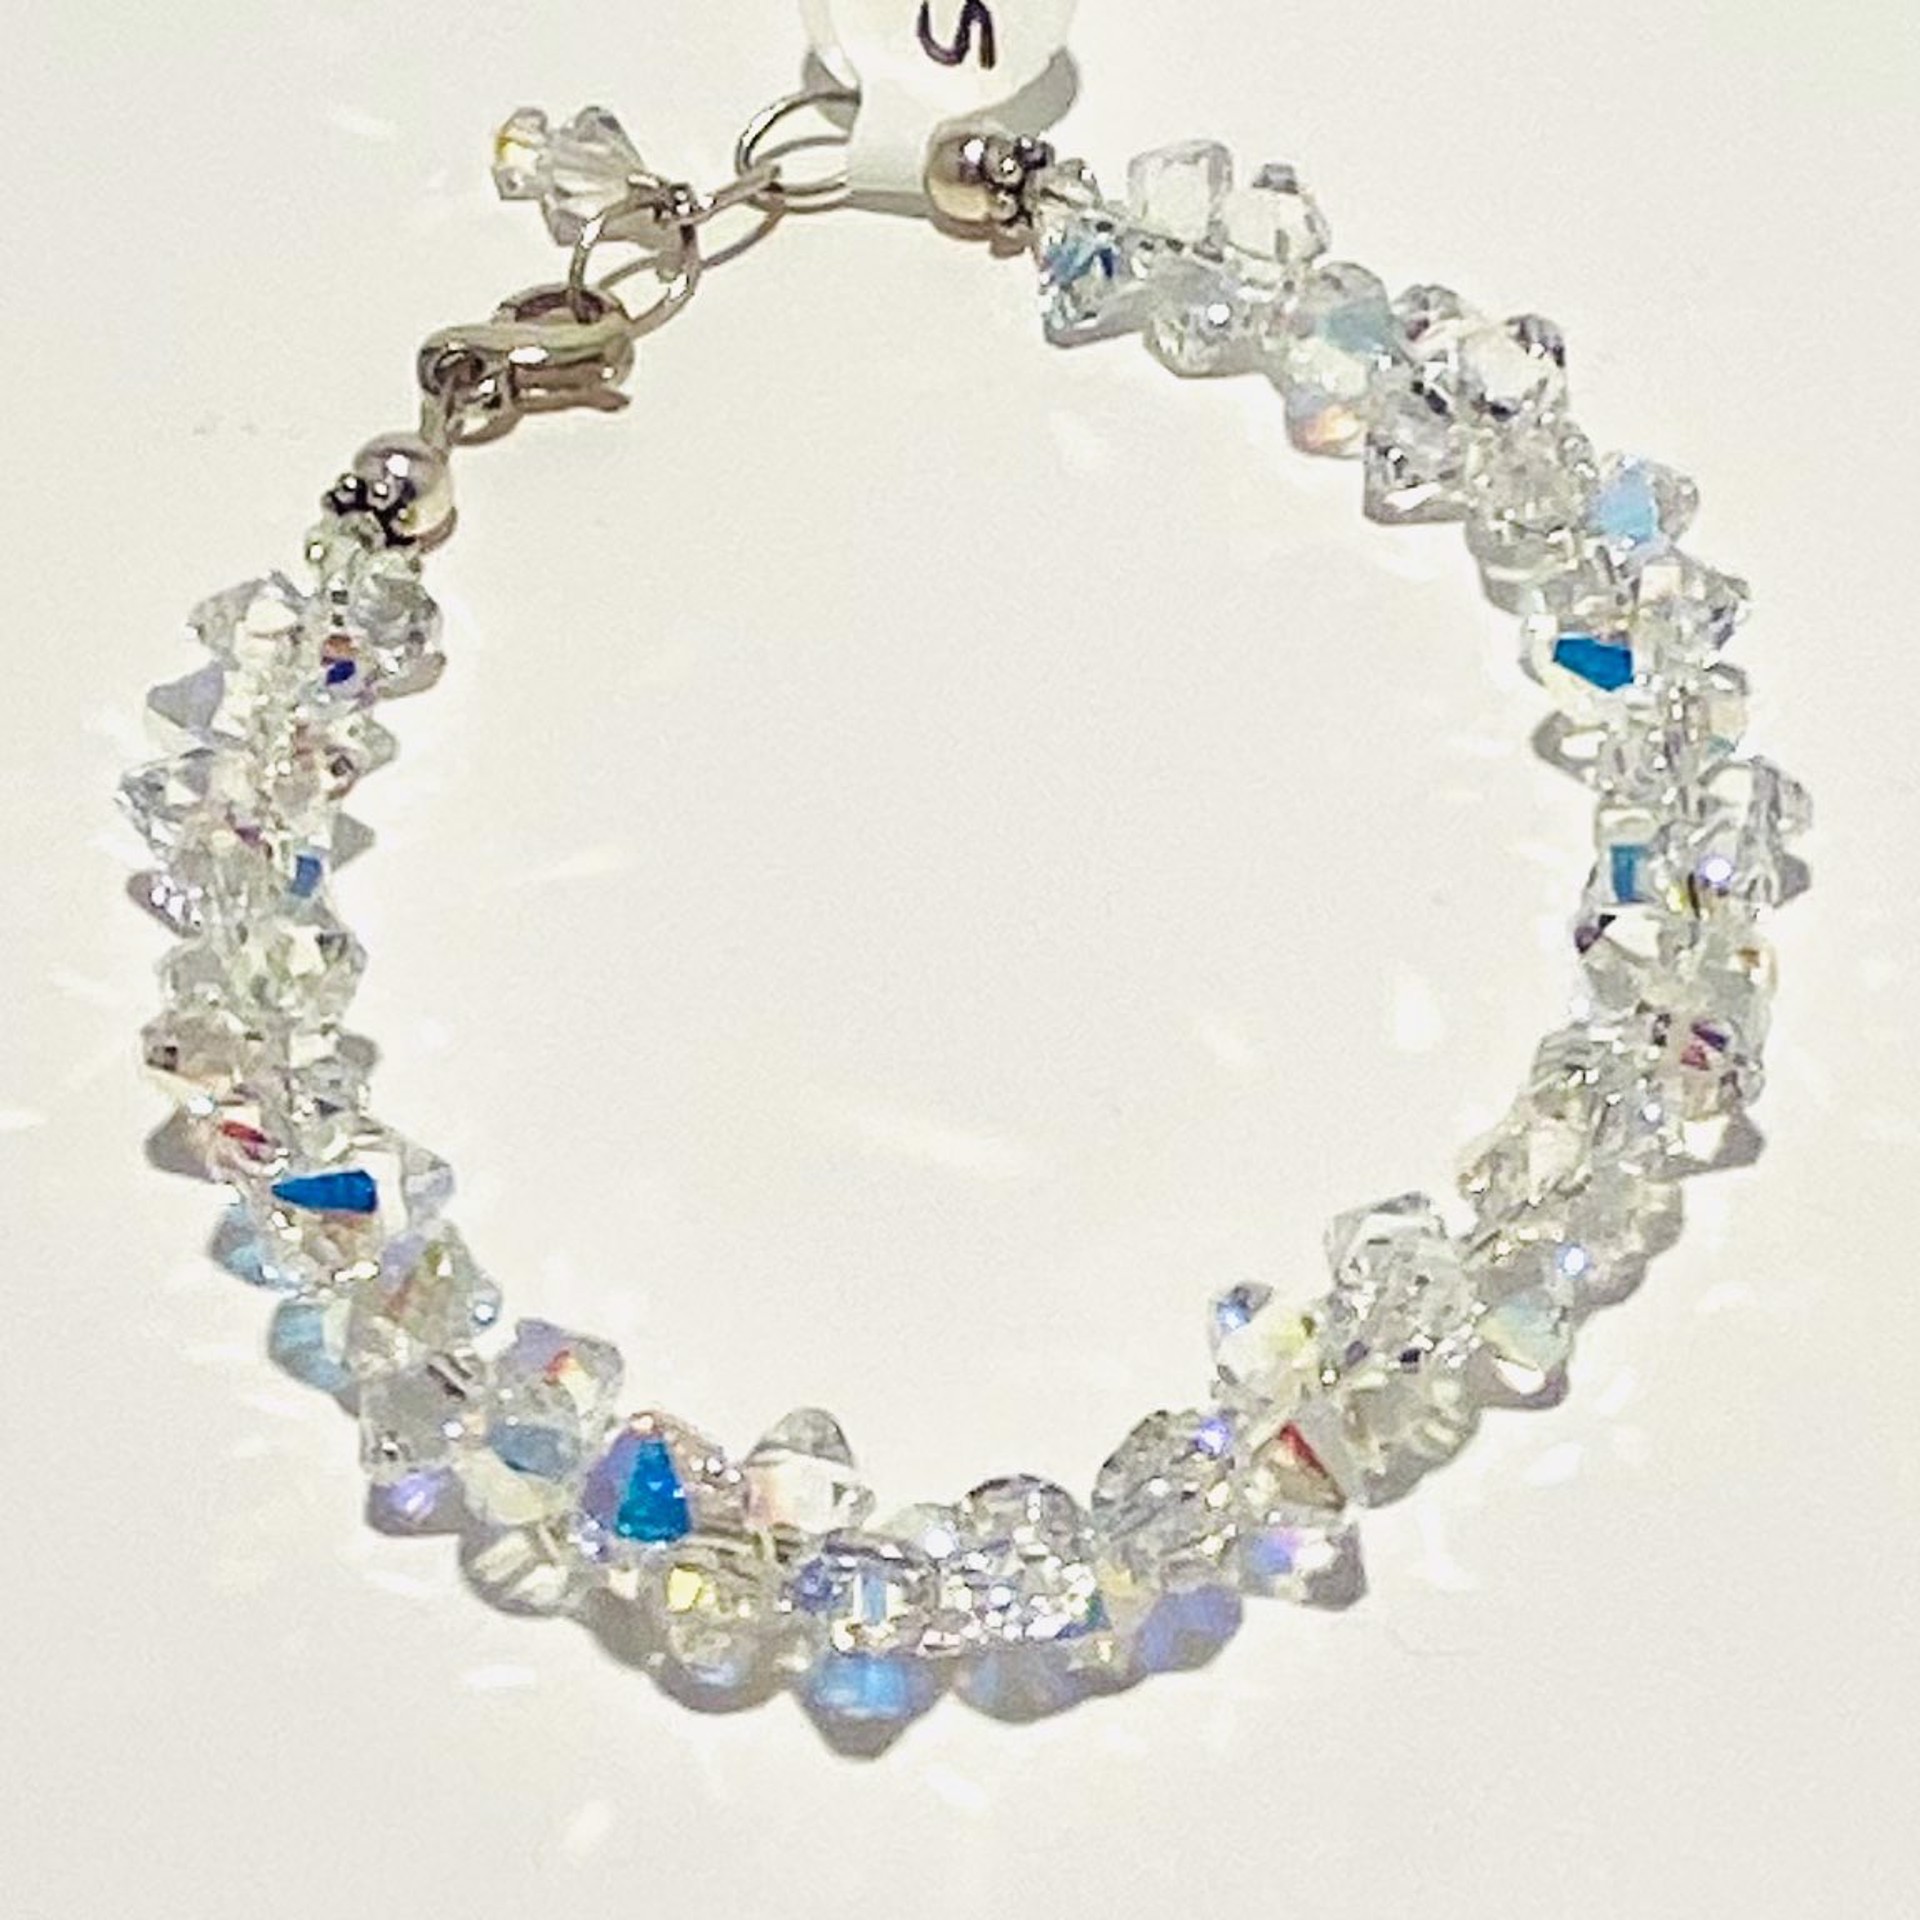 SHOSH22-16 Birthstone Bracelet~April "Diamond" Swarovski Crystal by Shoshannah Weinisch